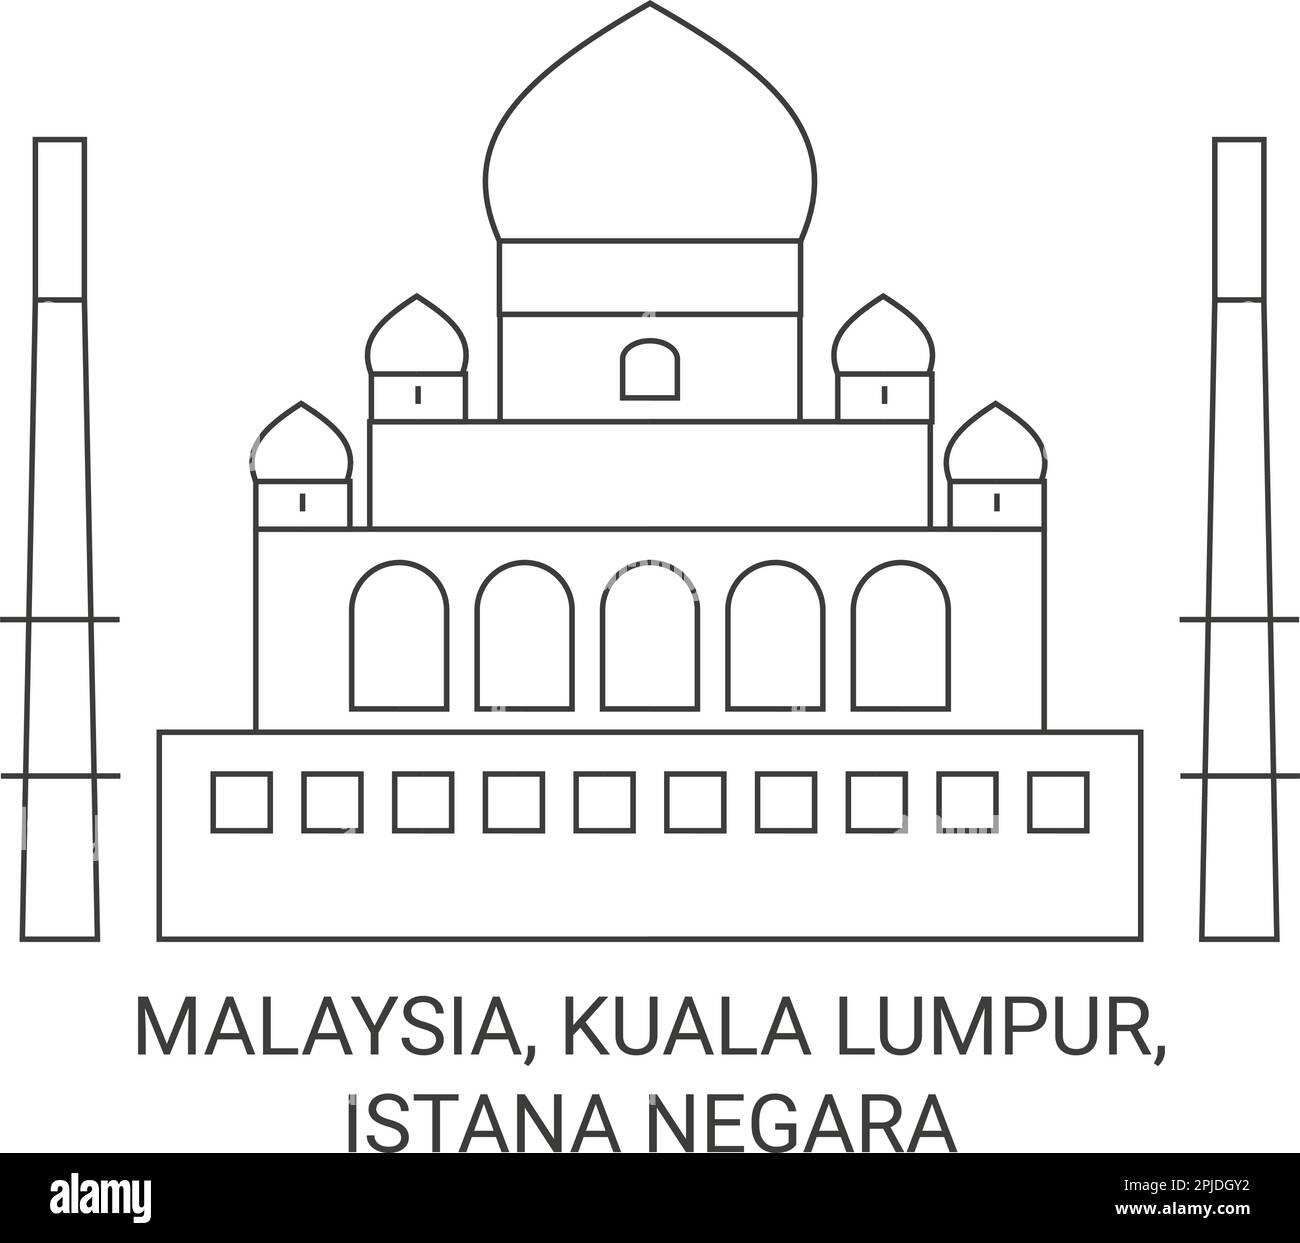 Malaysia, Kuala Lumpur, Istana Negara travel landmark vector ...